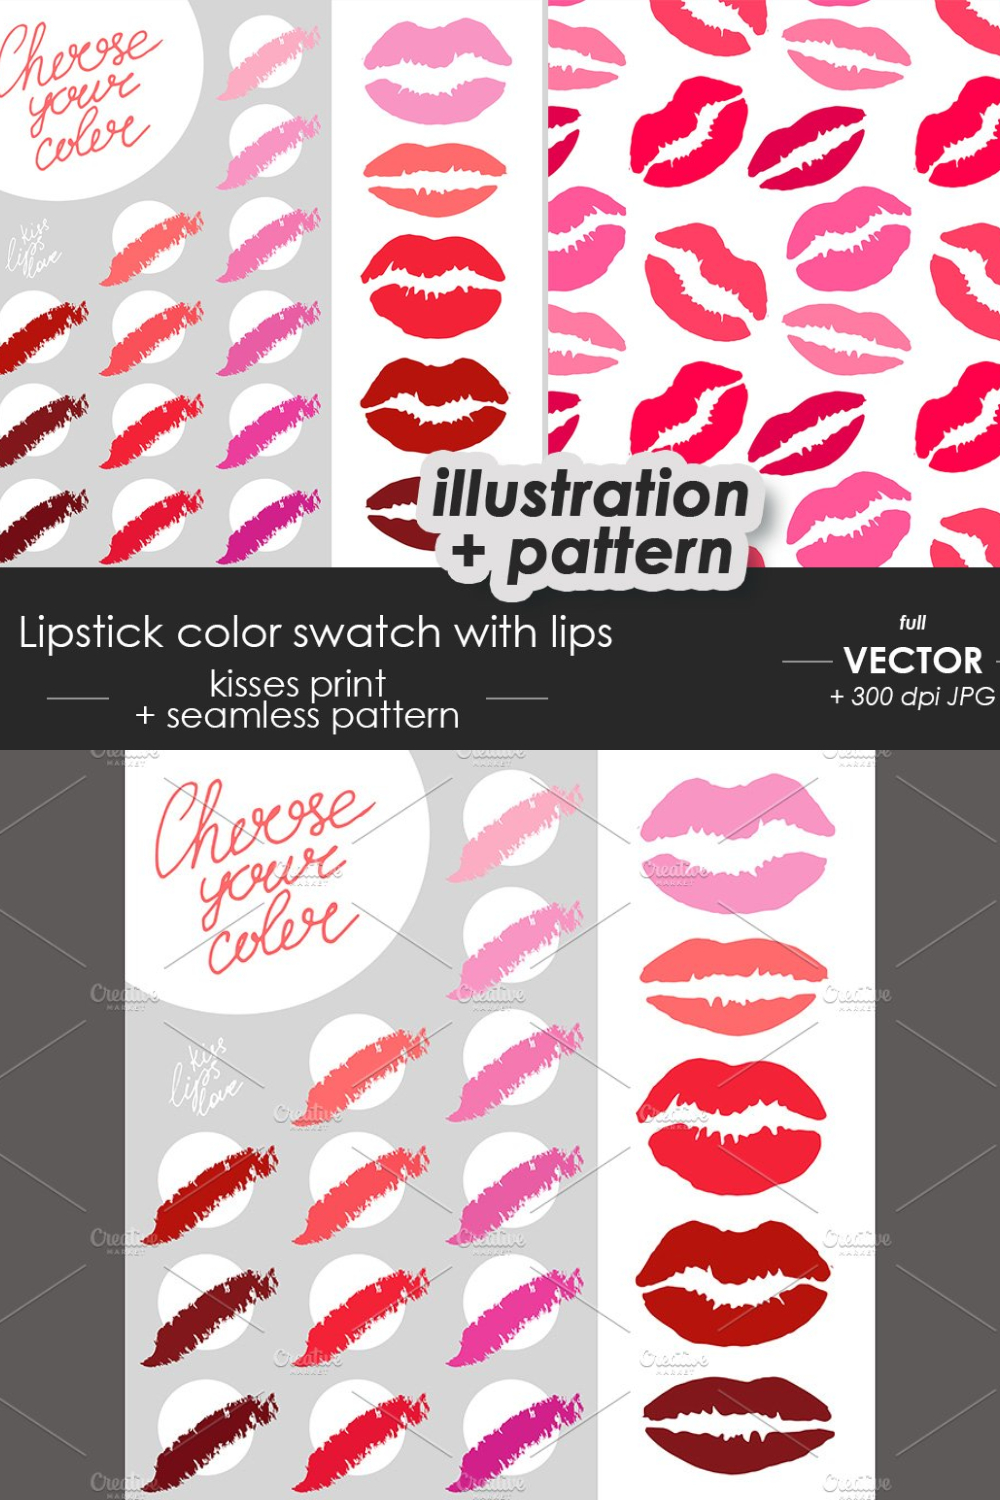 Lips Color Swatch, Beauty Salon - Pinterest.